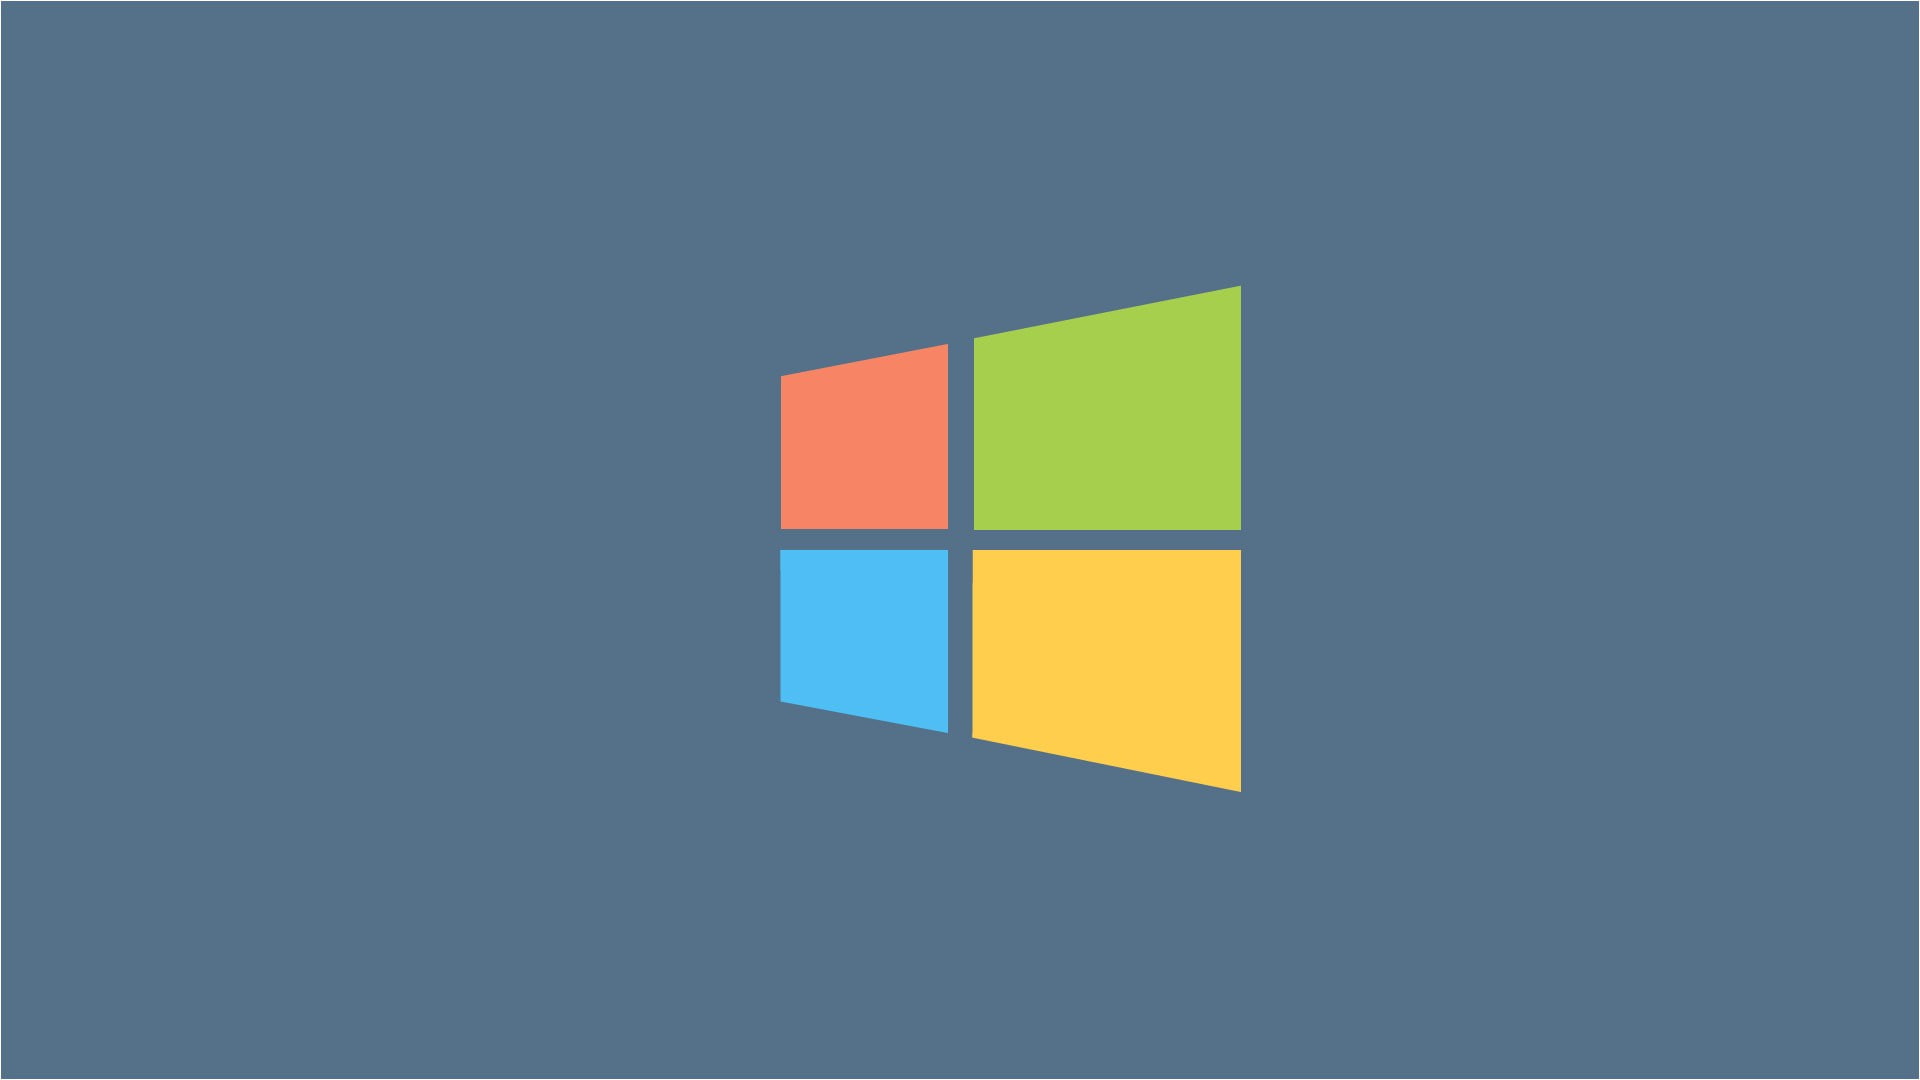 Windows 10, Microsoft Windows, multi colored, reminder, copy space